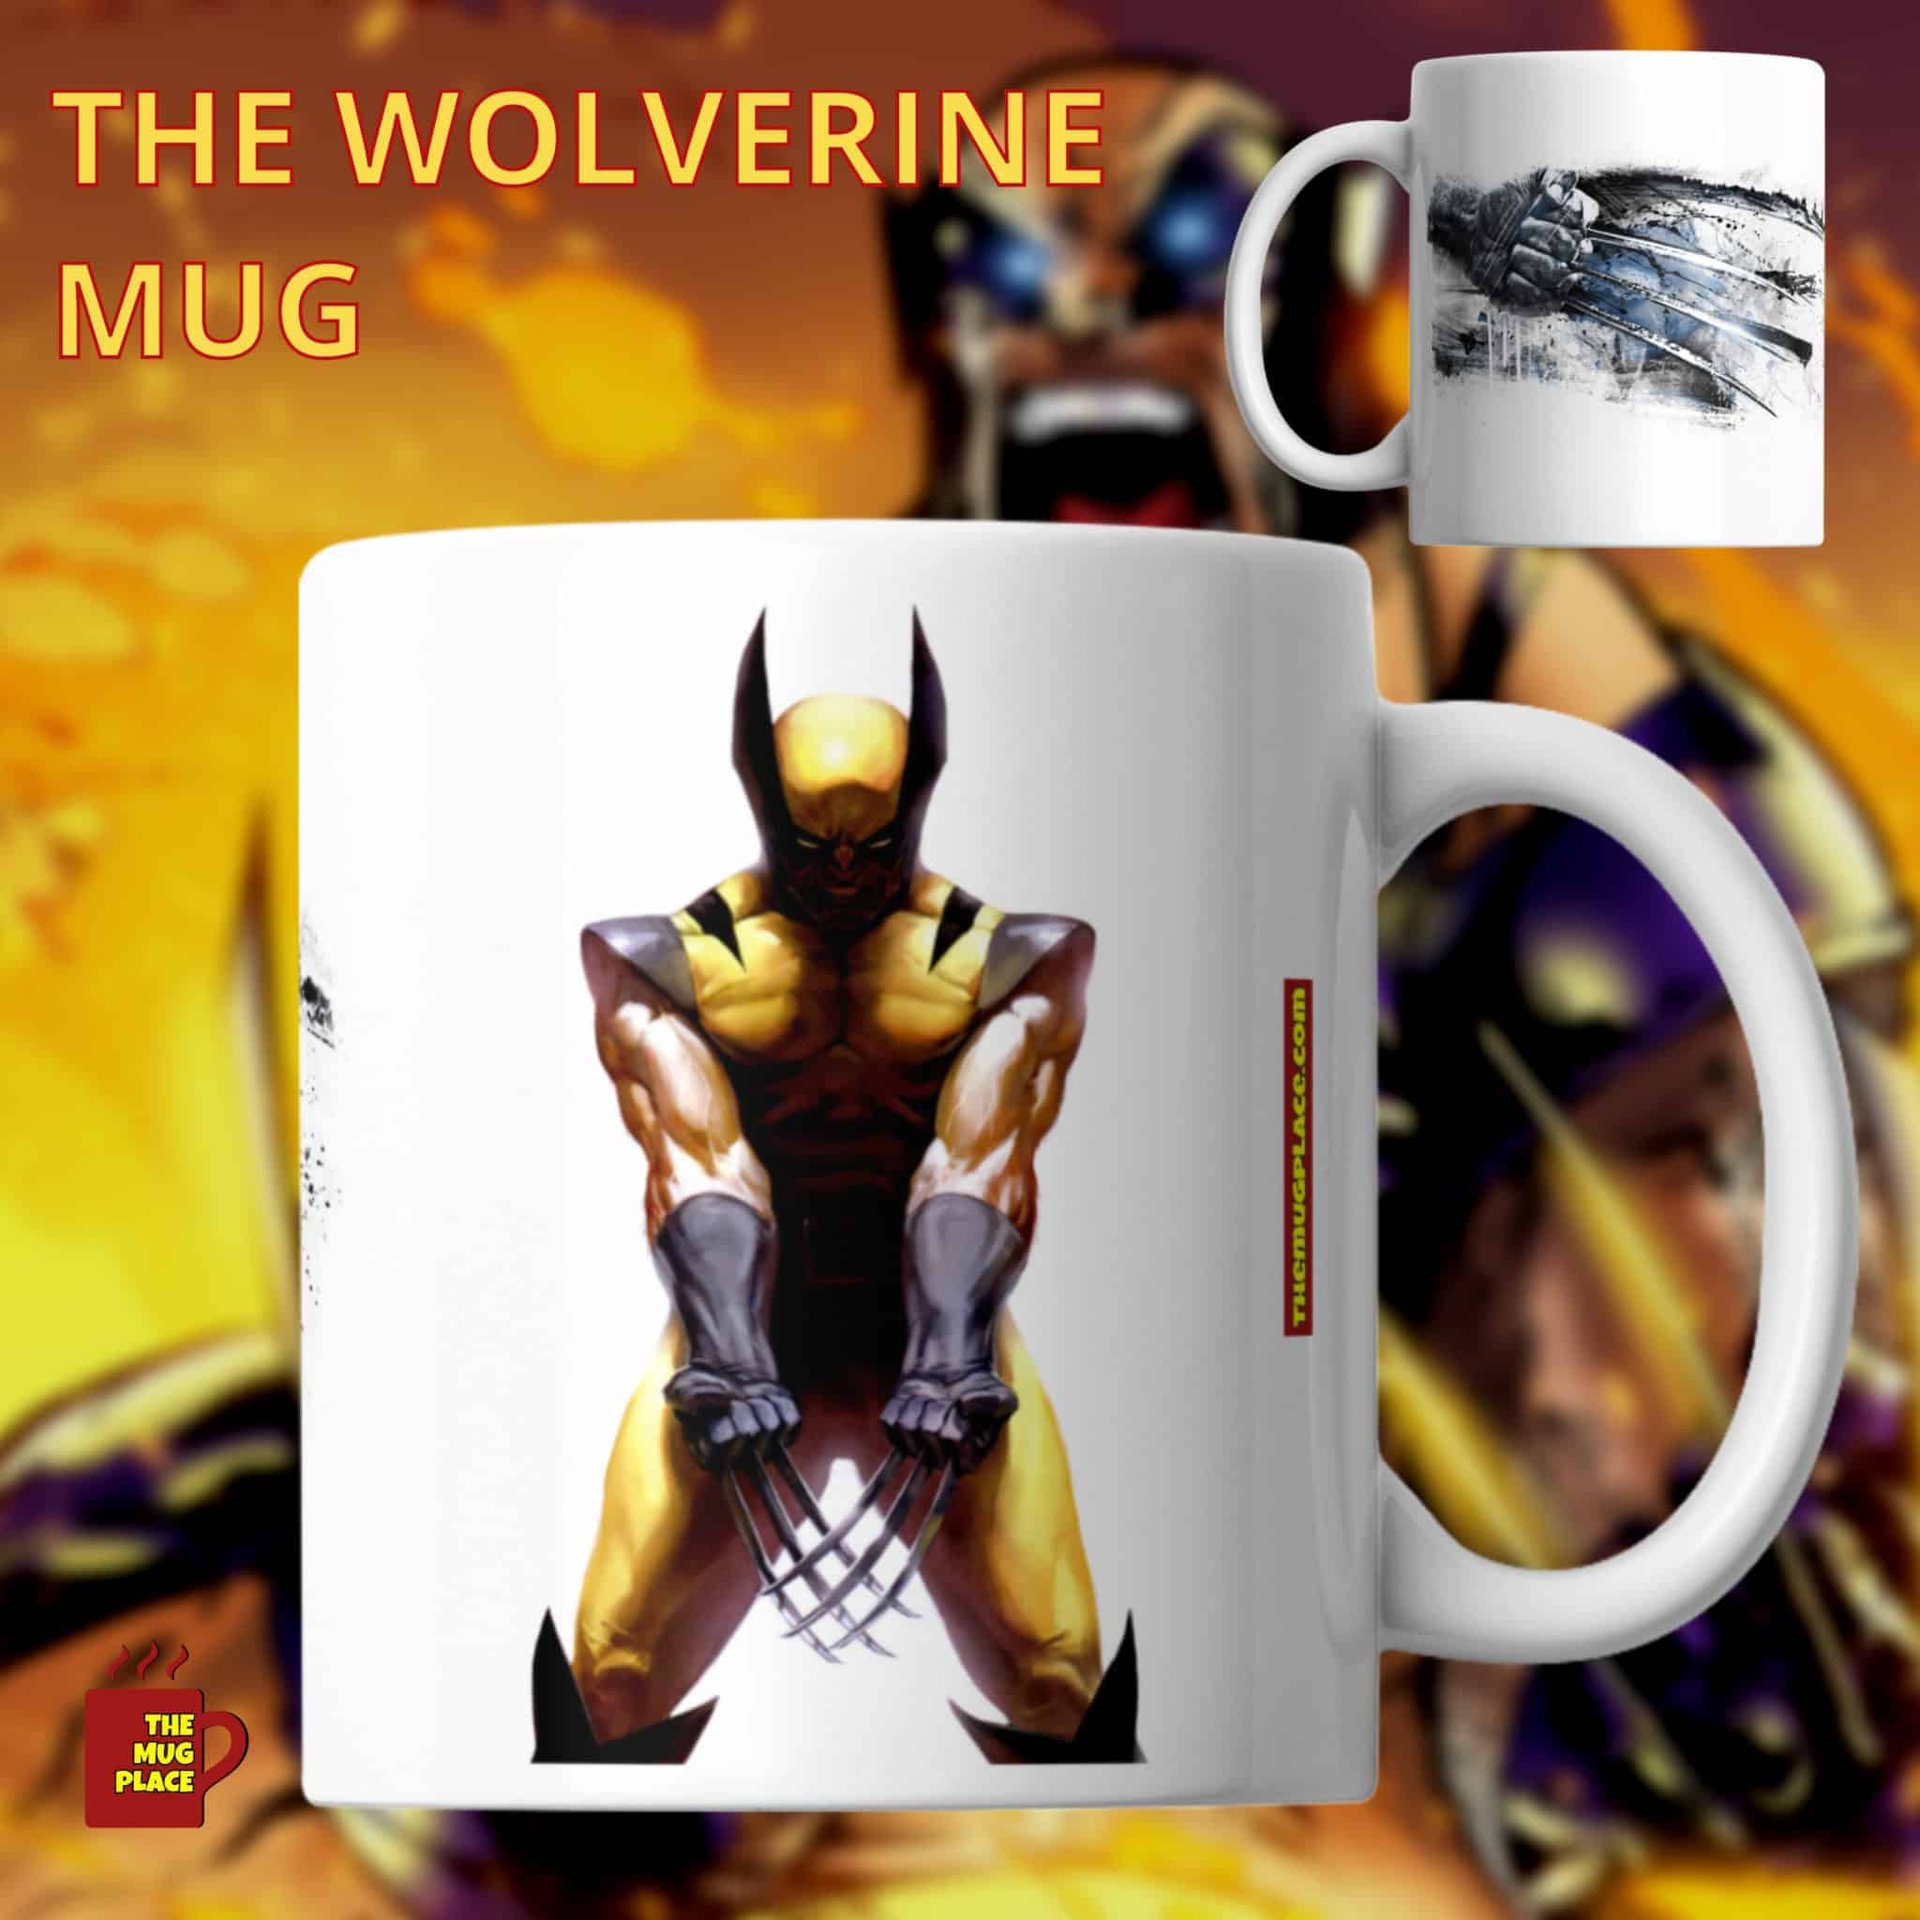 The Wolverine Mug